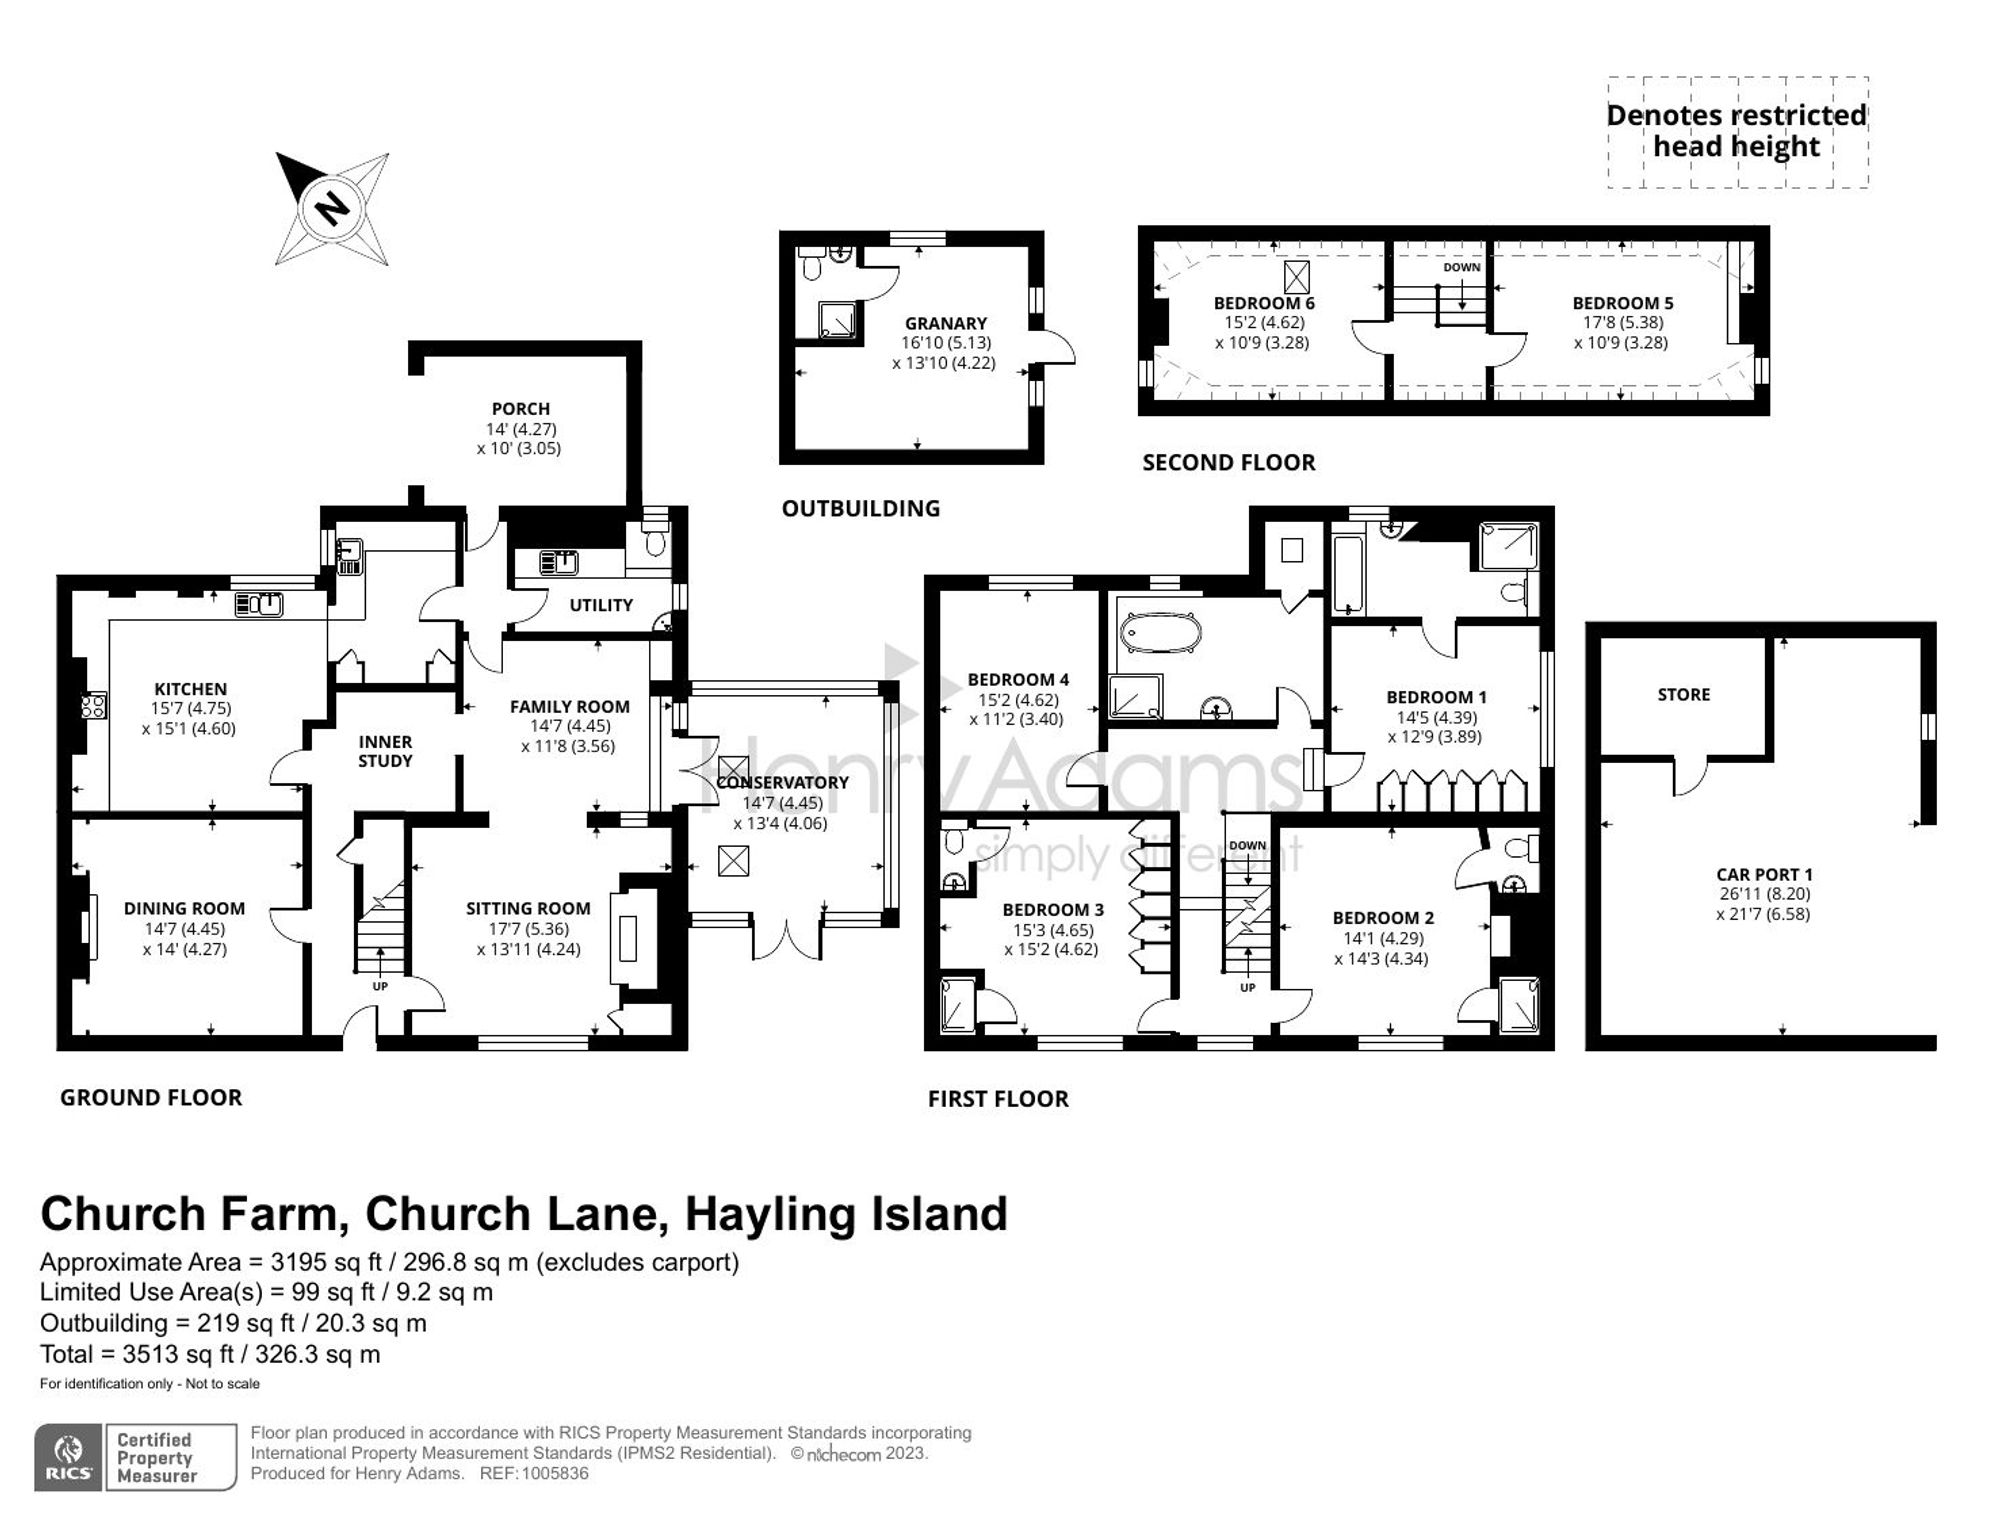 Church Lane, Hayling Island, PO11 floorplans